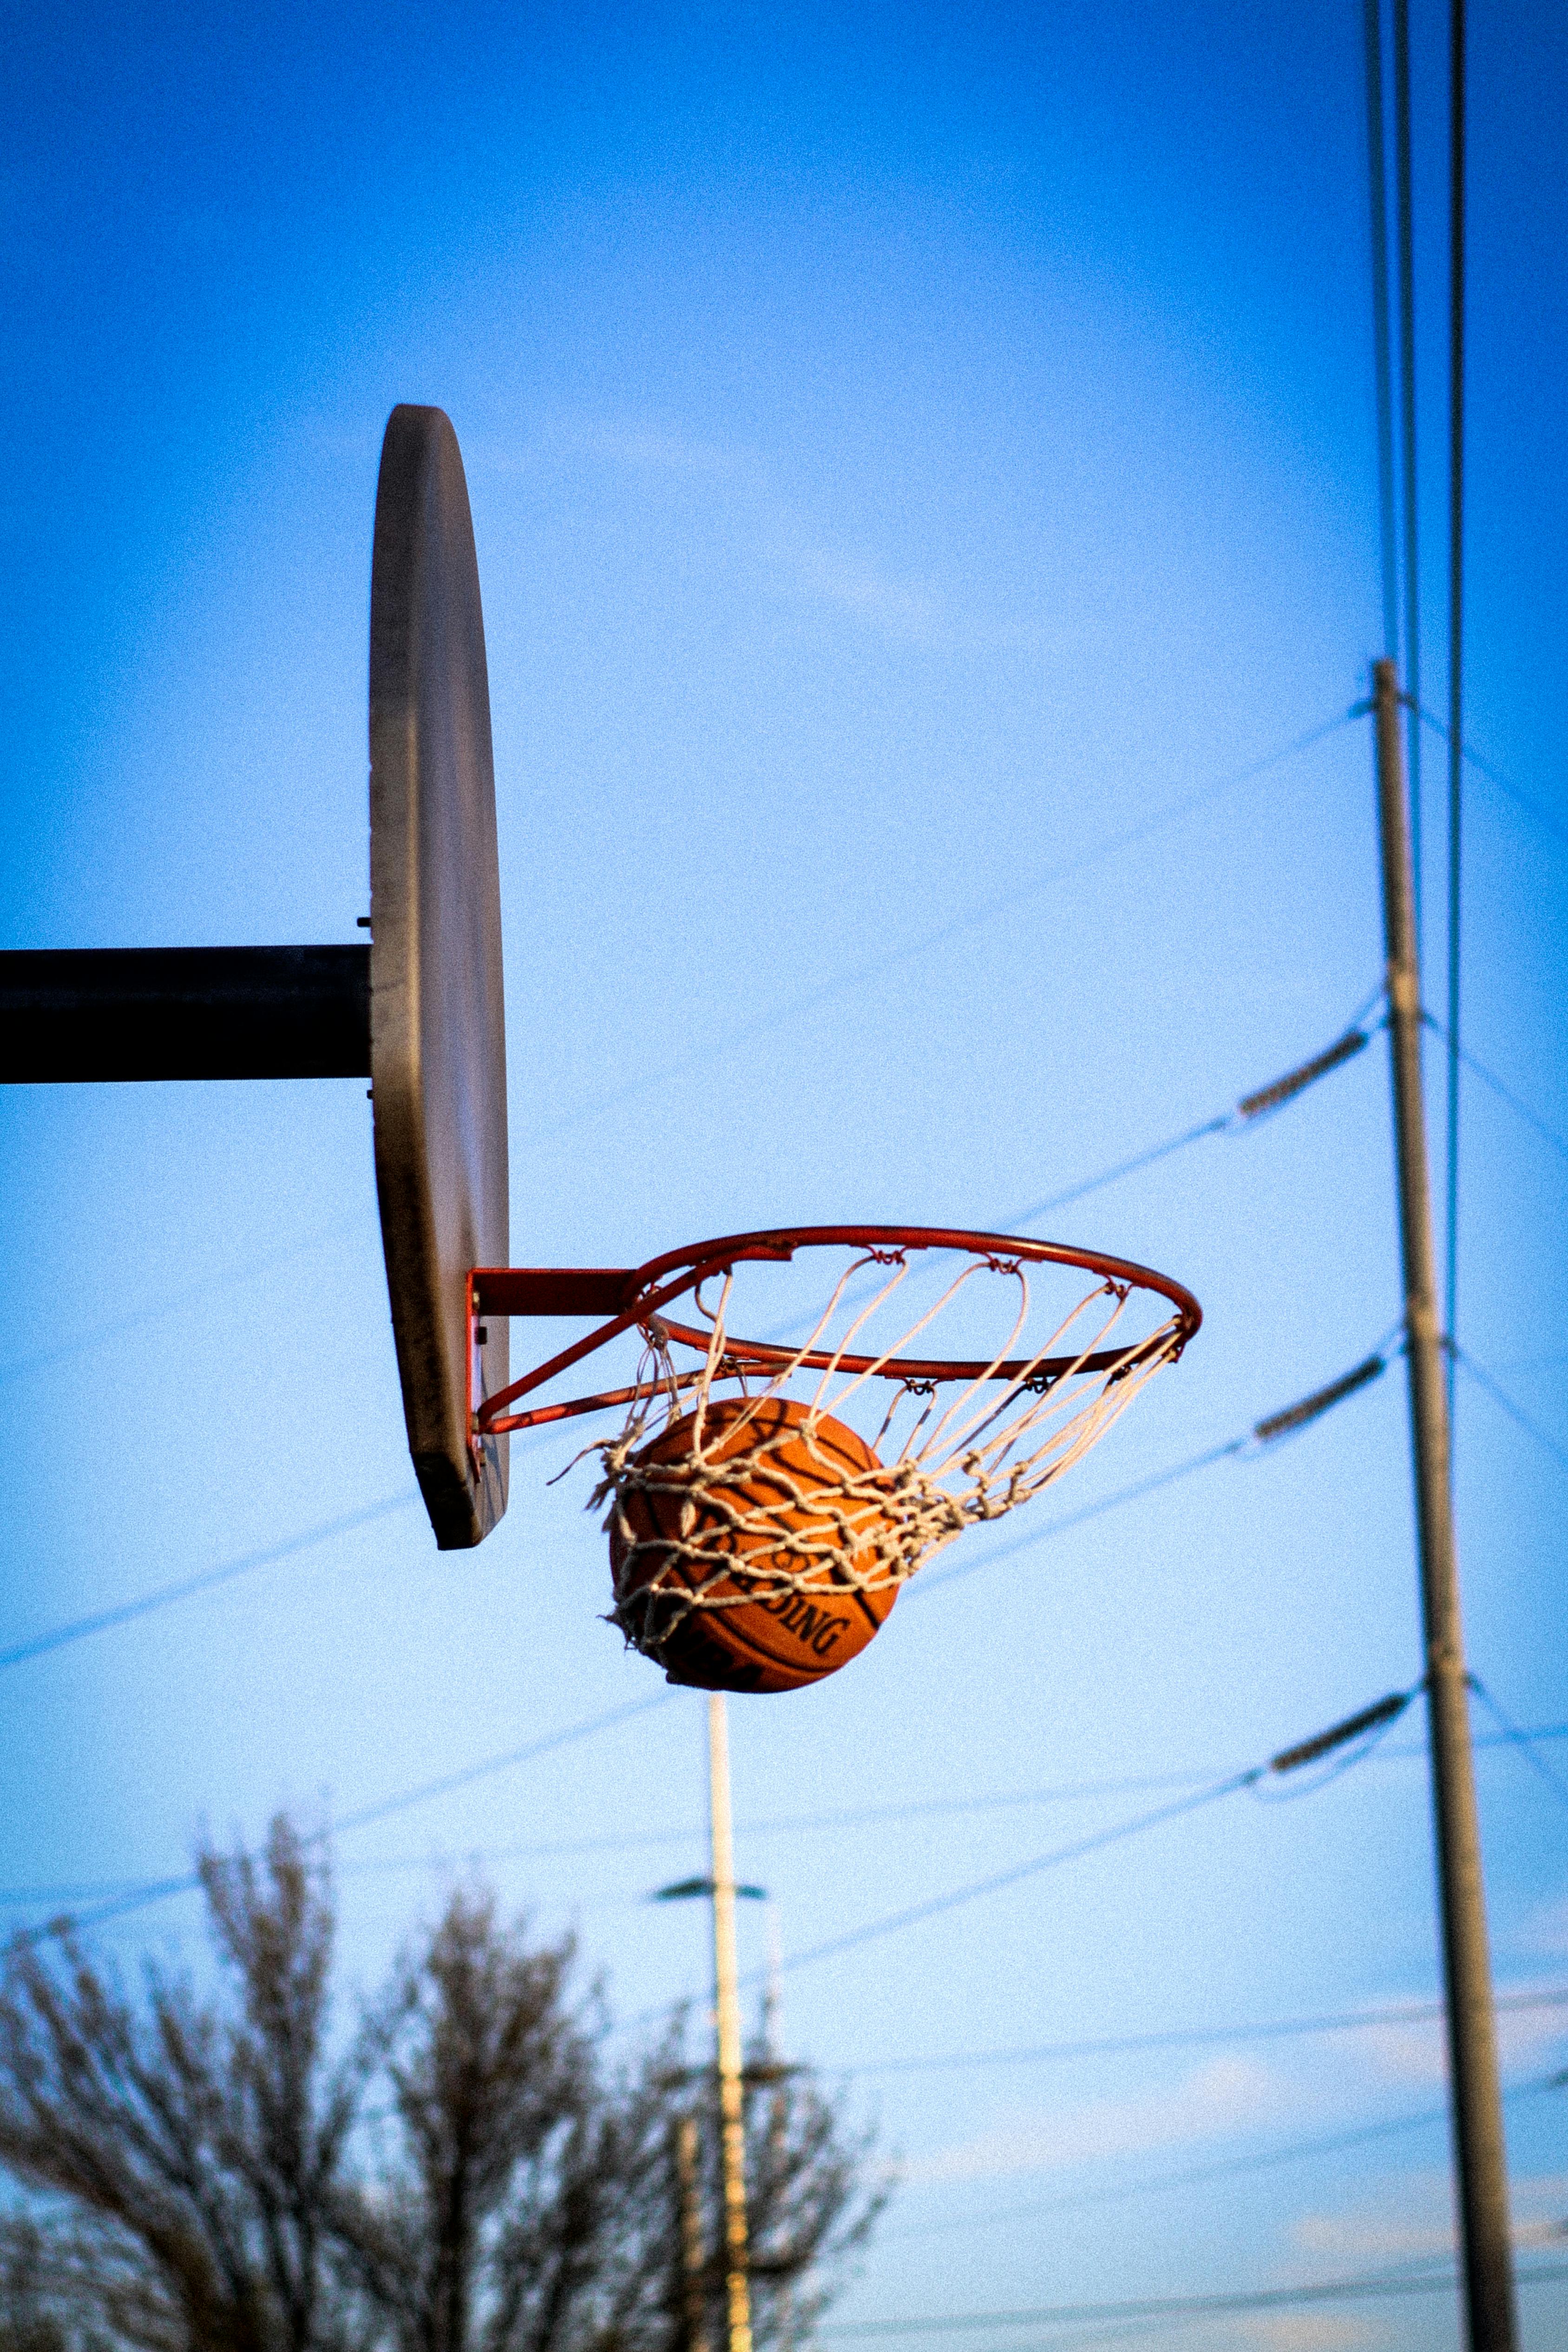 Basketball Court Background Images  Free Download on Freepik